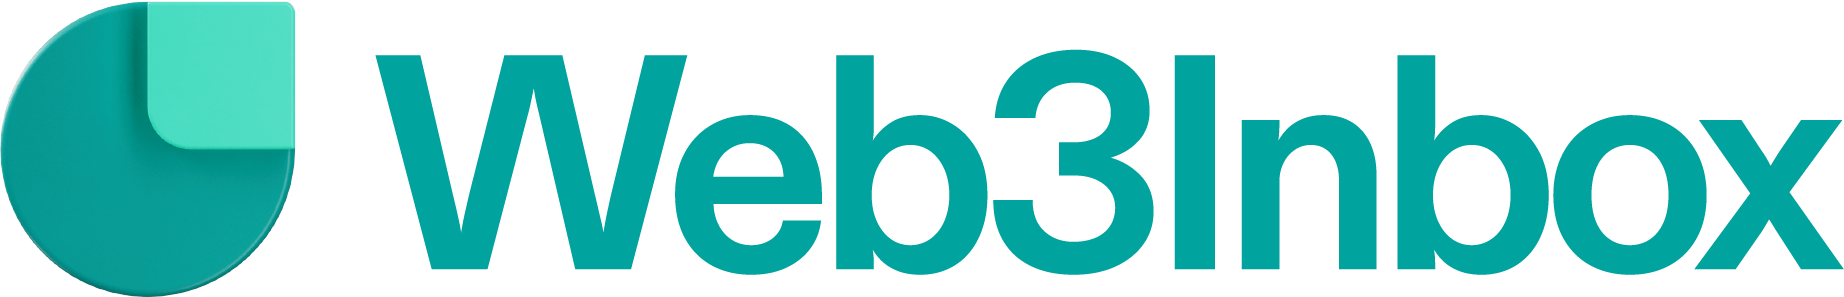 The Web3Inbox logo